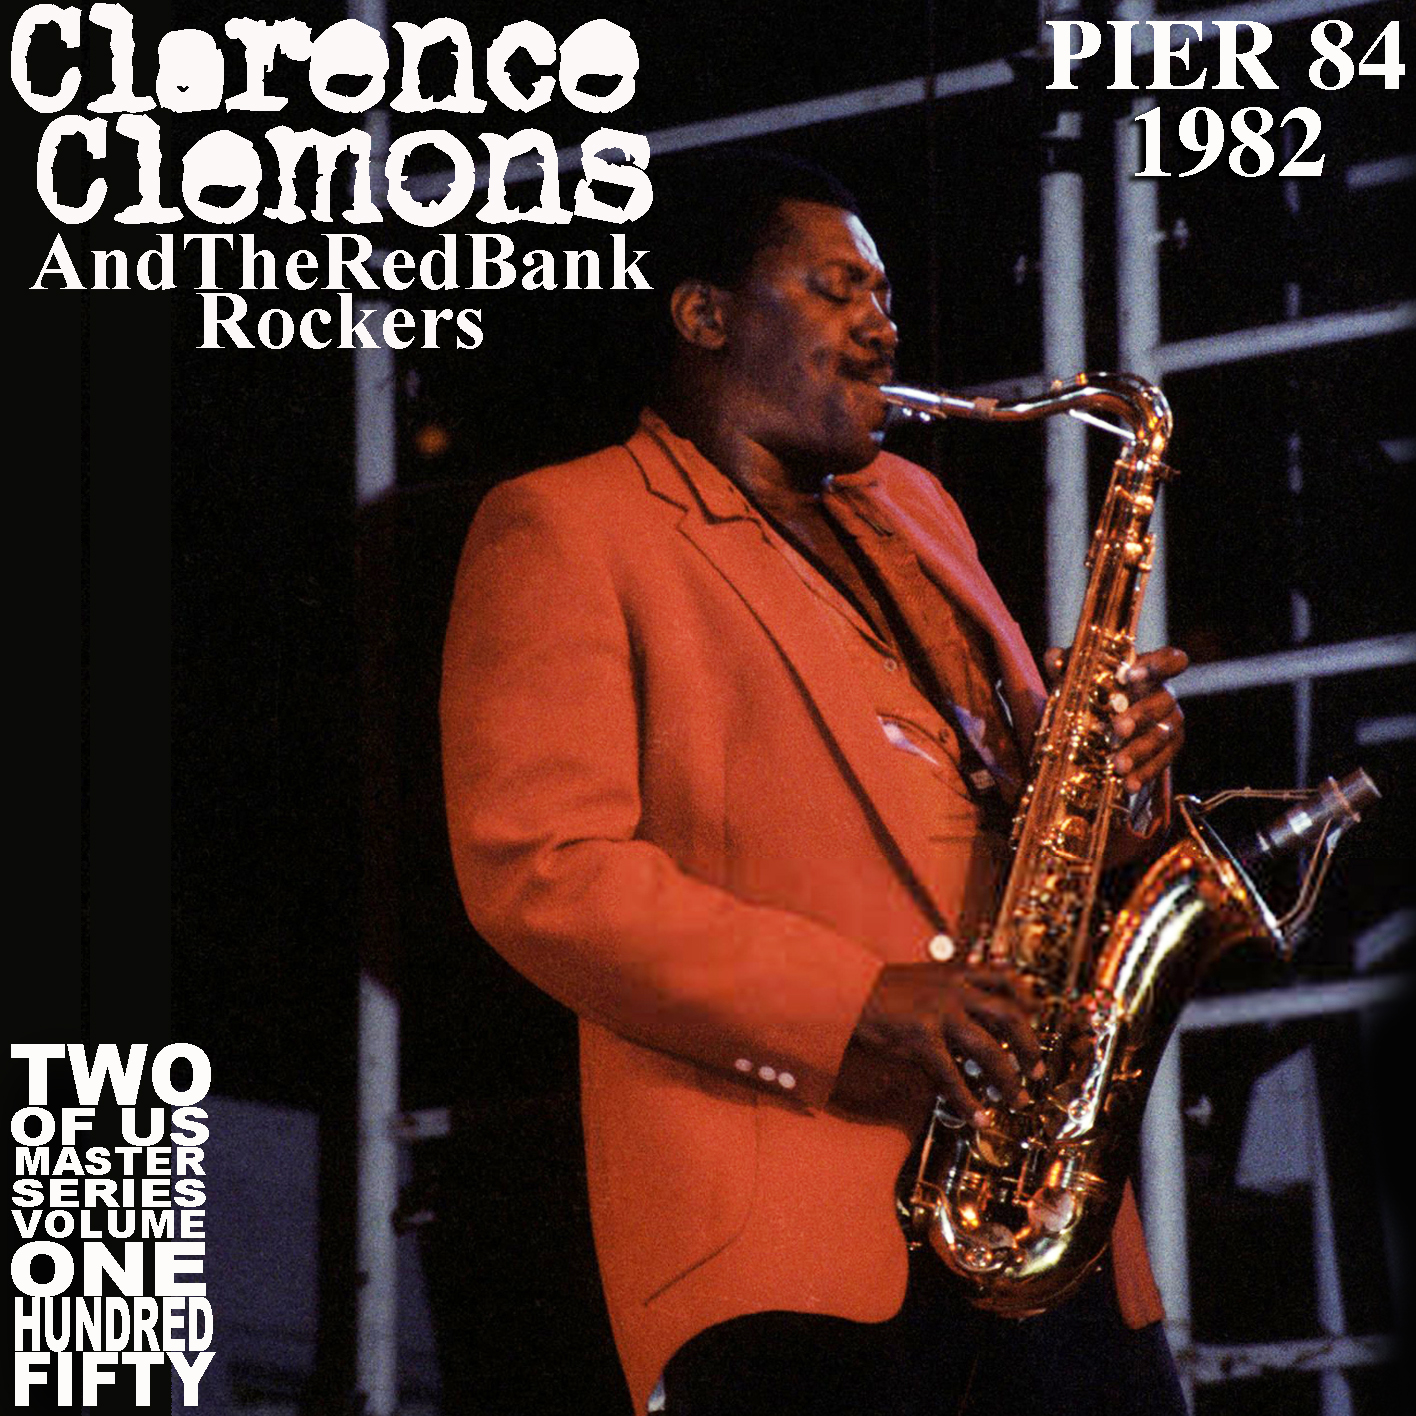 ClarenceClemons1982-07-31Pier84NYC (2).jpg